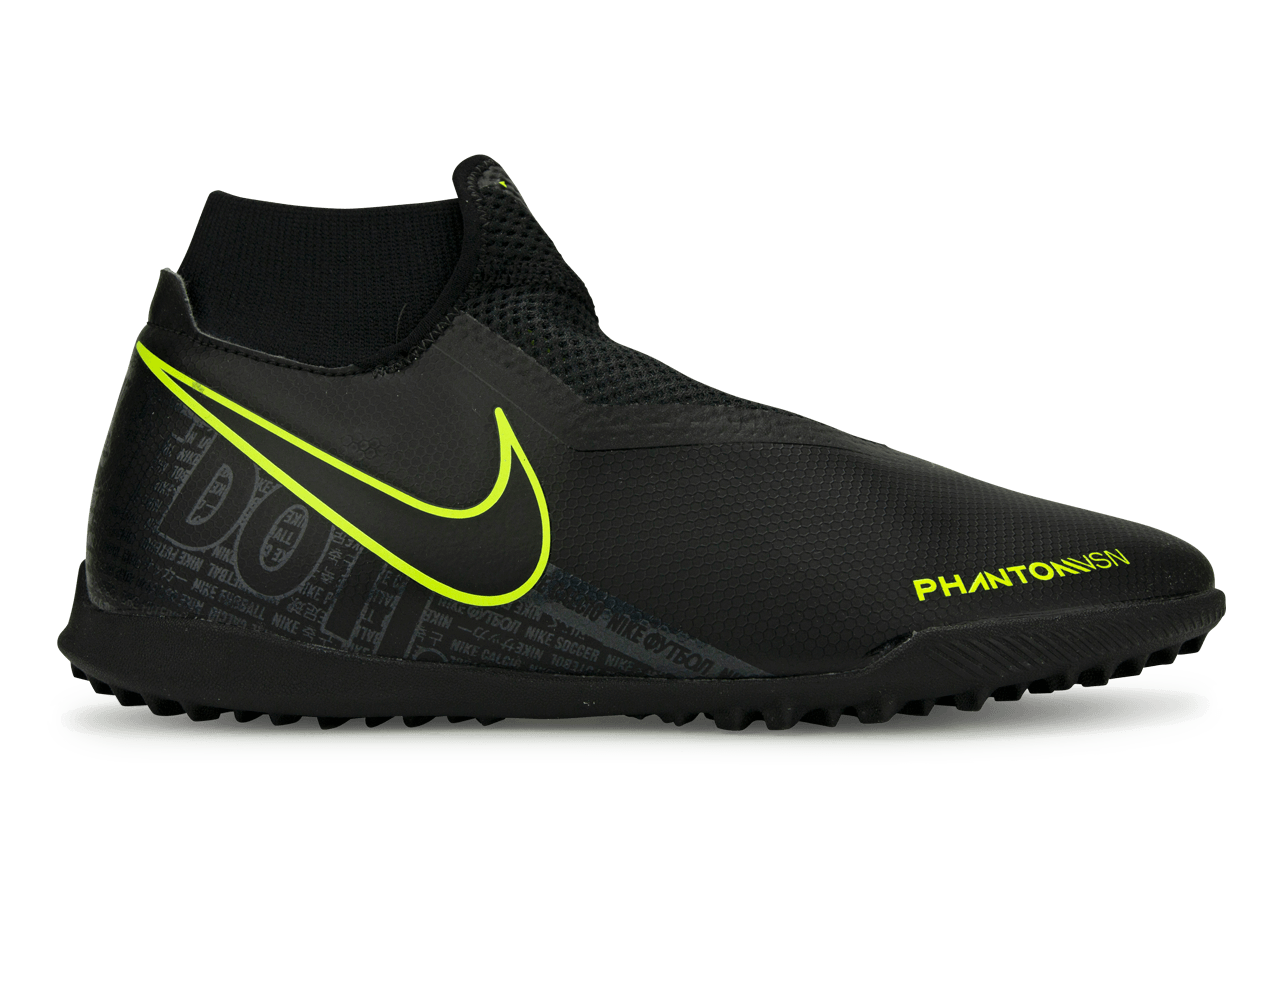 Nike Men's PhantomVSN Academy DF Turf Soccer Shoes Black/Volt